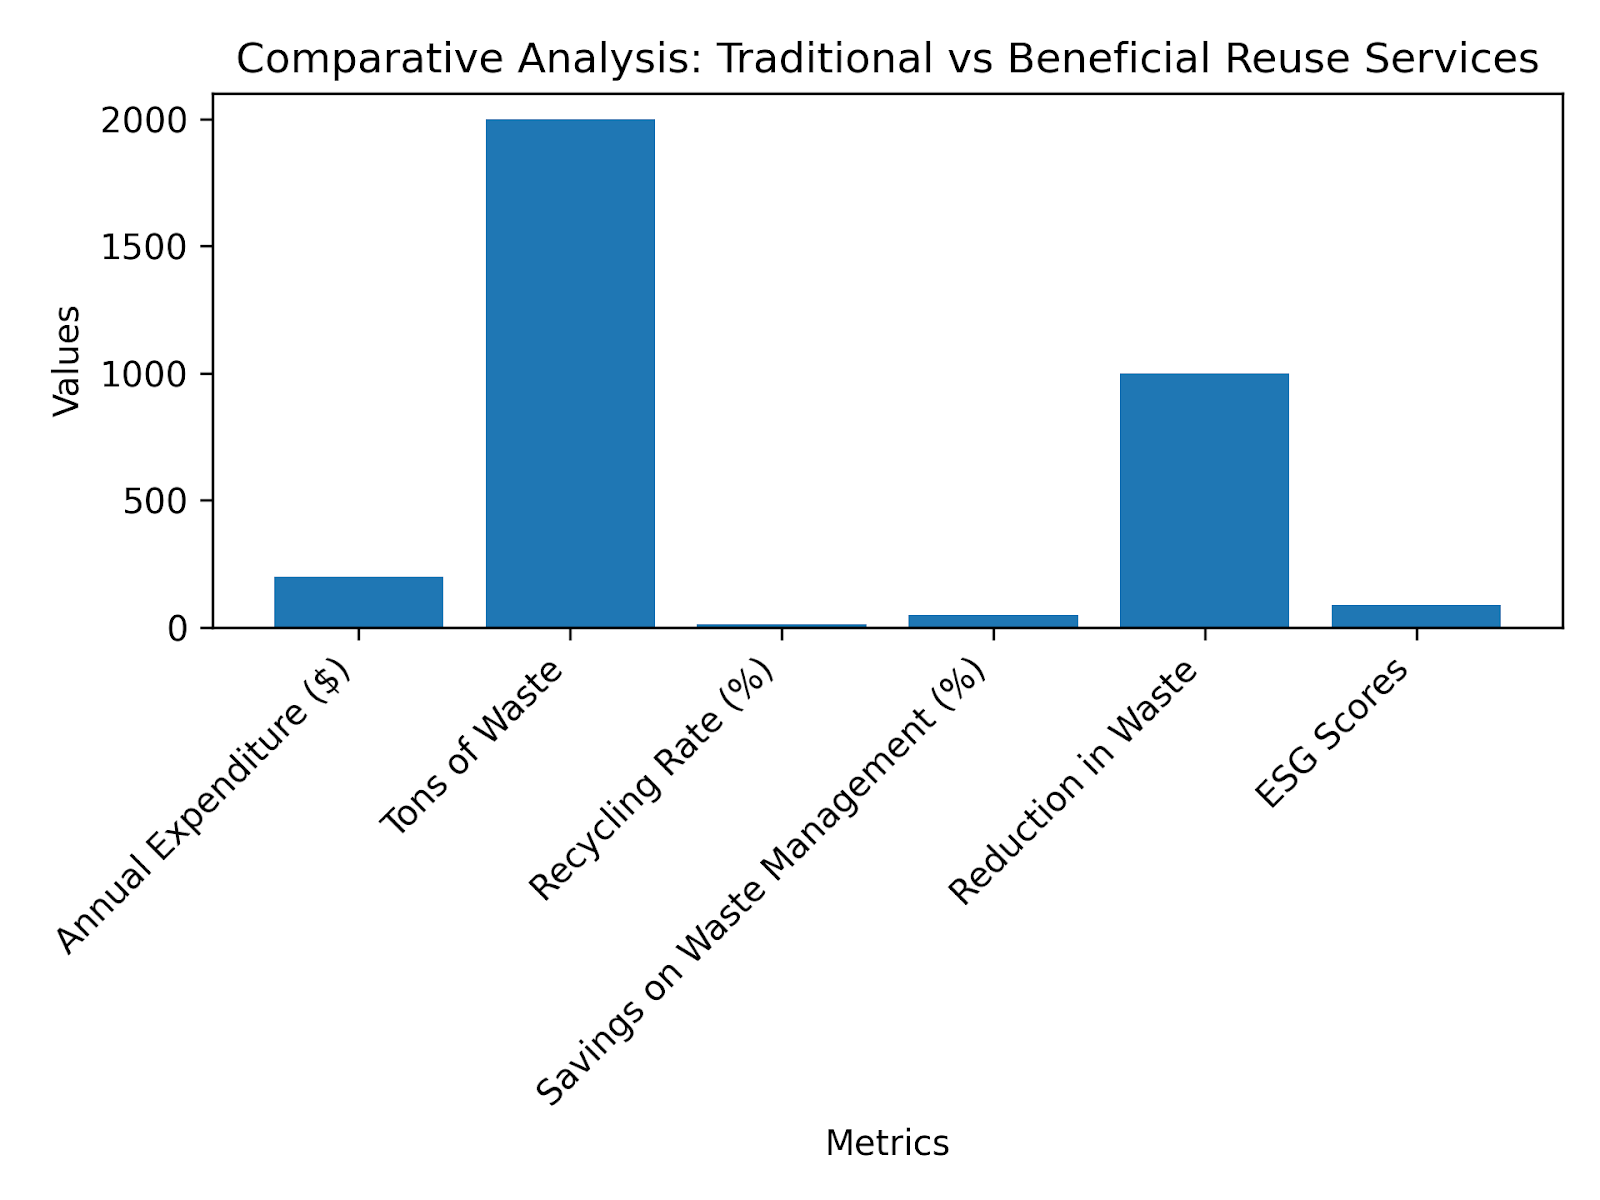 Comparative Advantage of Beneficial Reuse Services